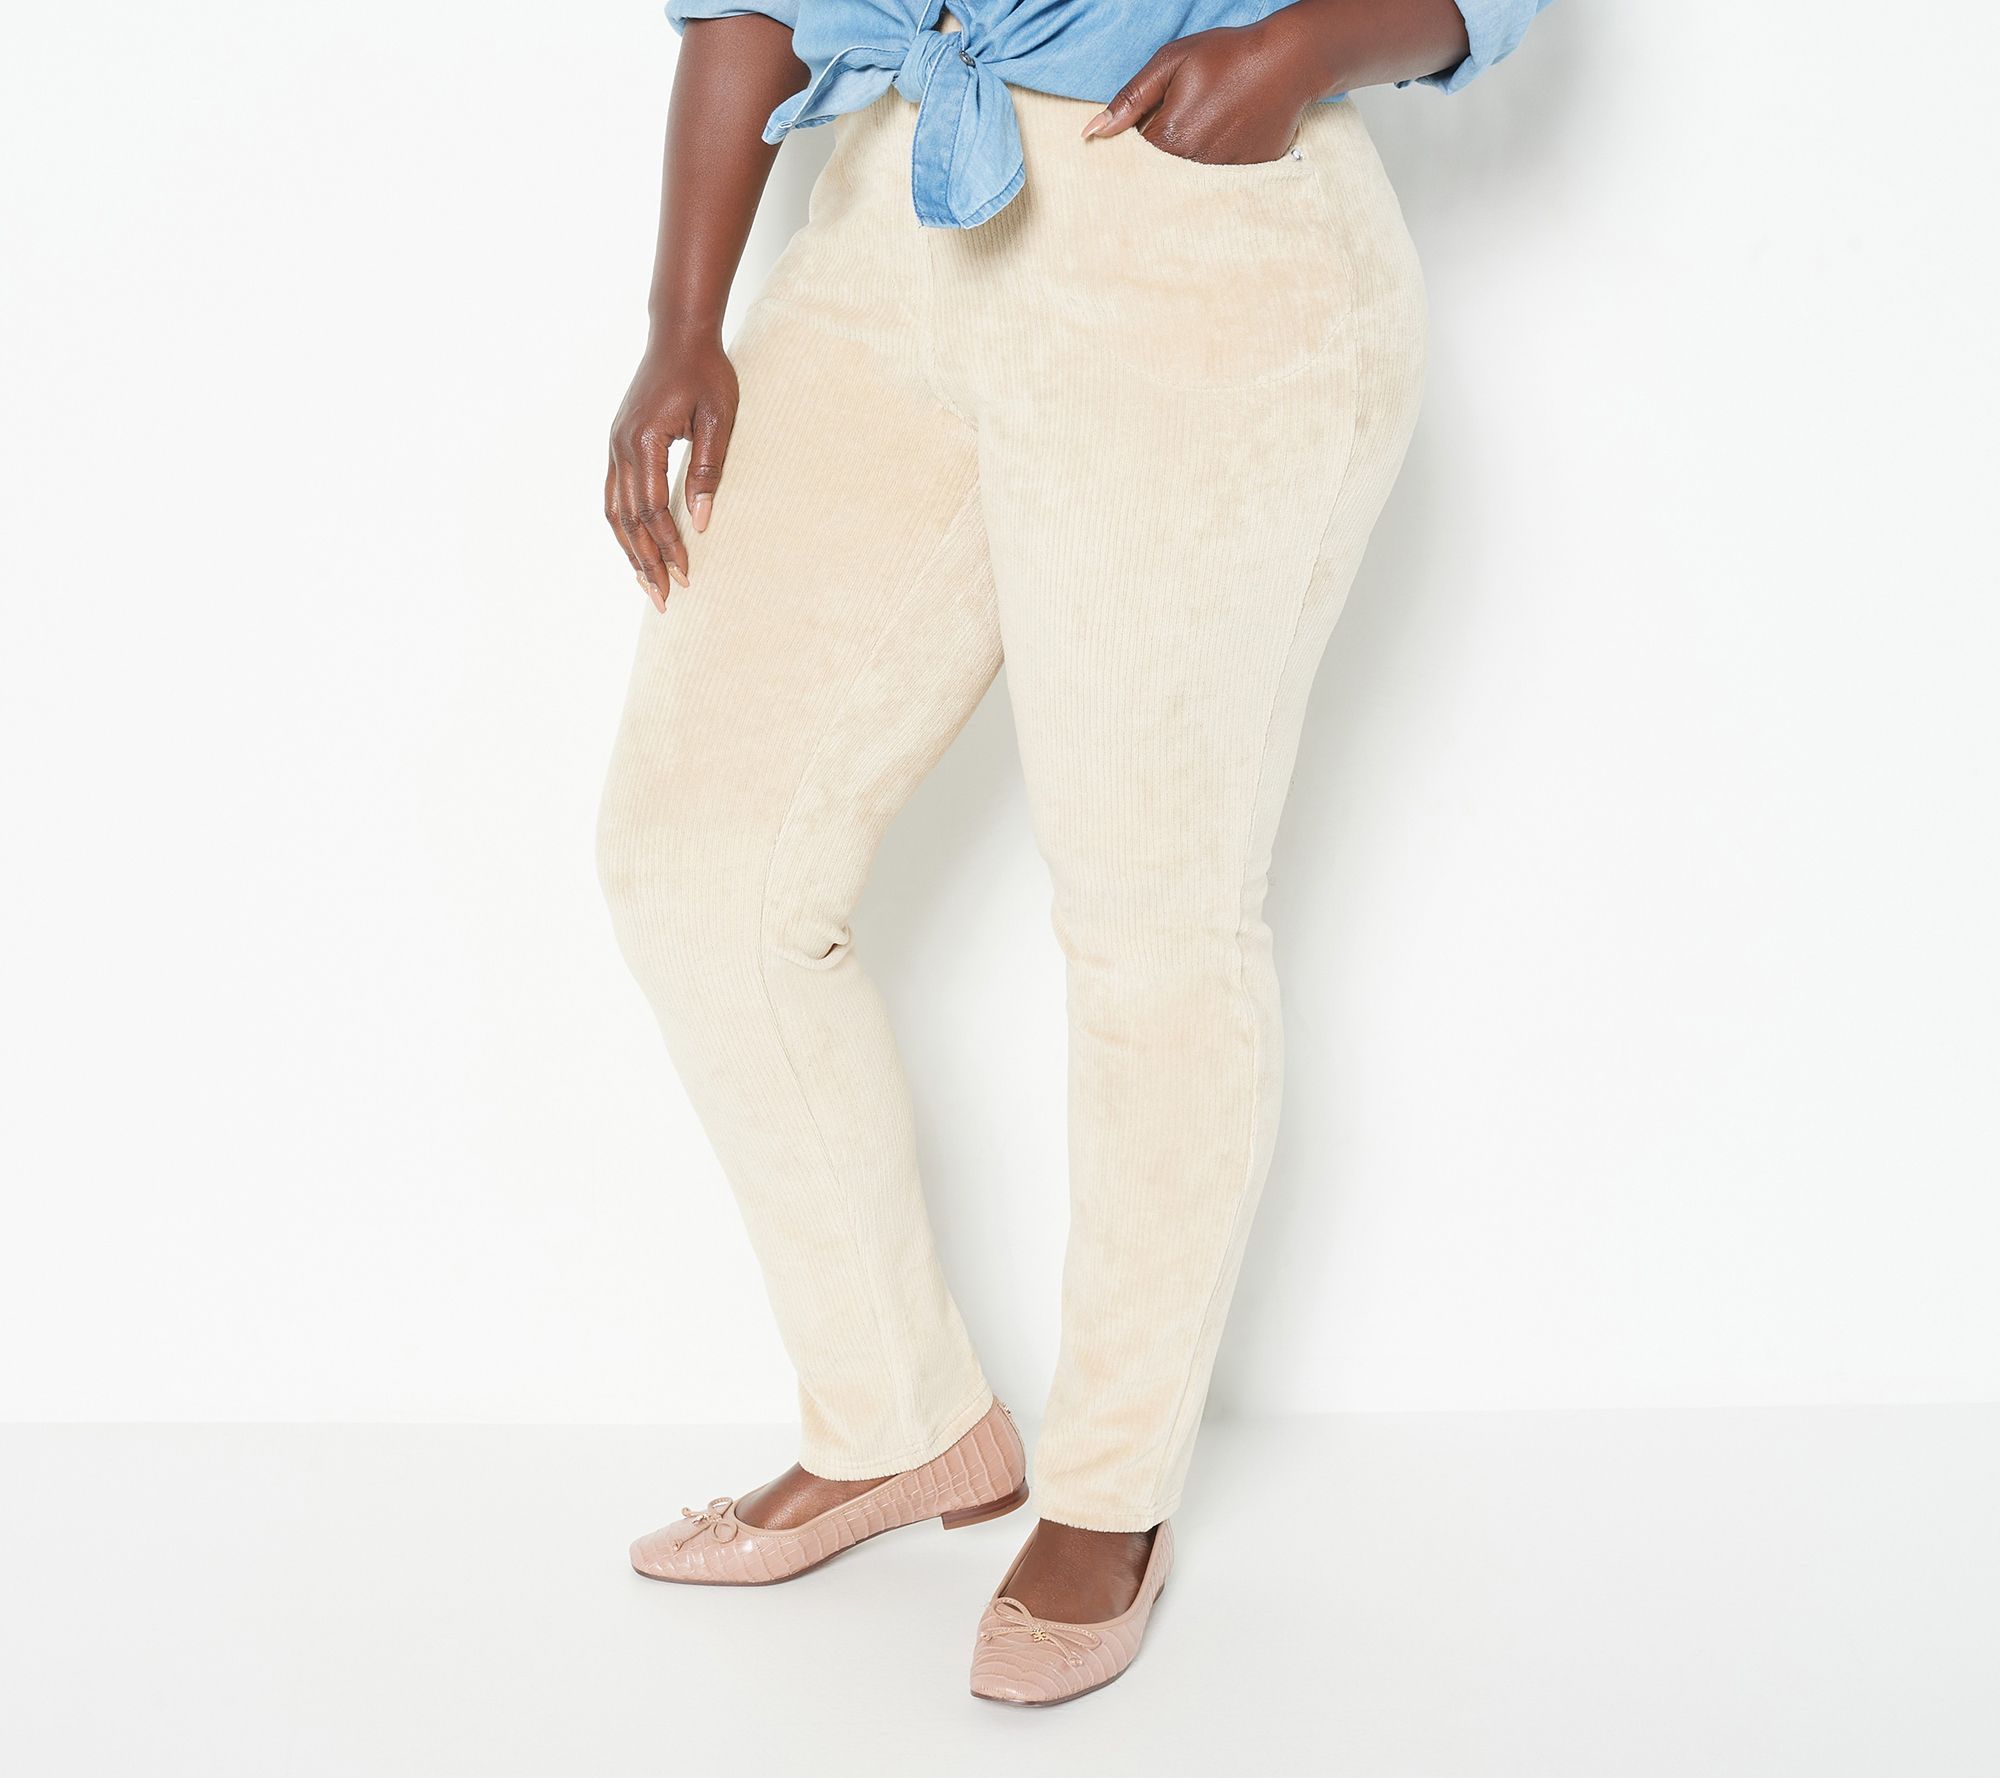 Quacker Factory Women's Pants Sz XL Knit Corduroy Pull-On Slim Leg Beige A270756